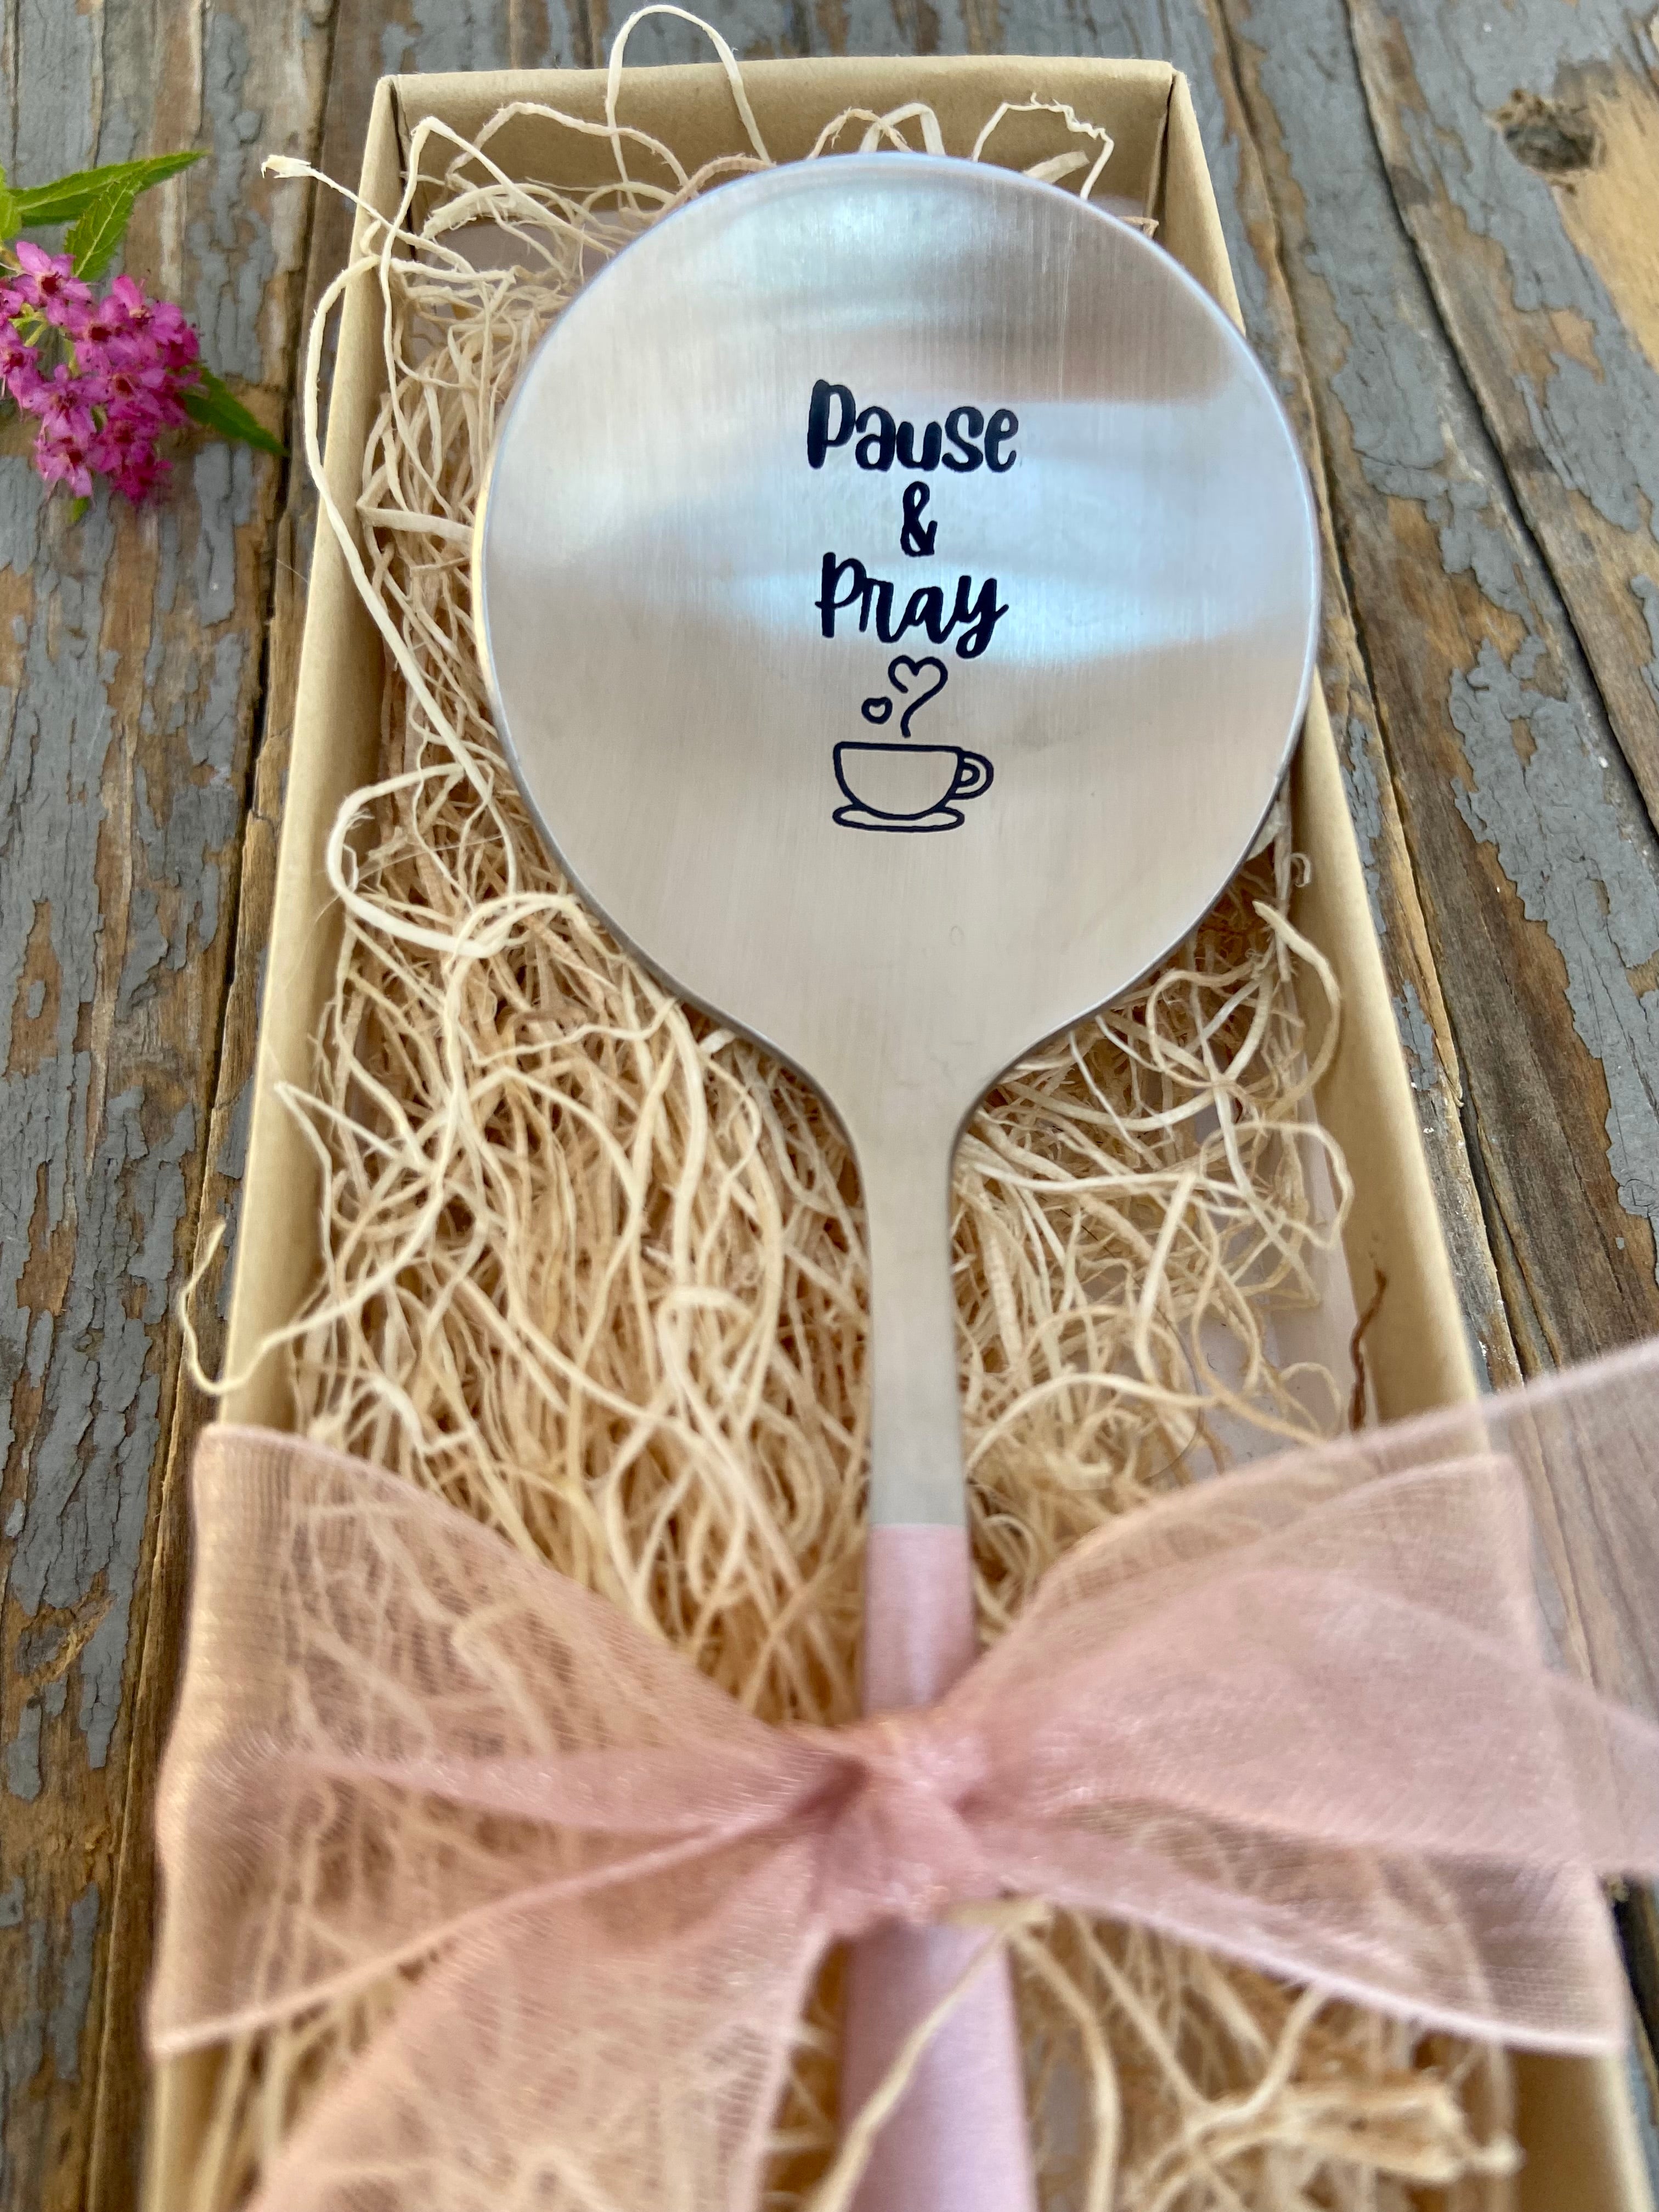 "Pause & Pray" Engraved Spoon